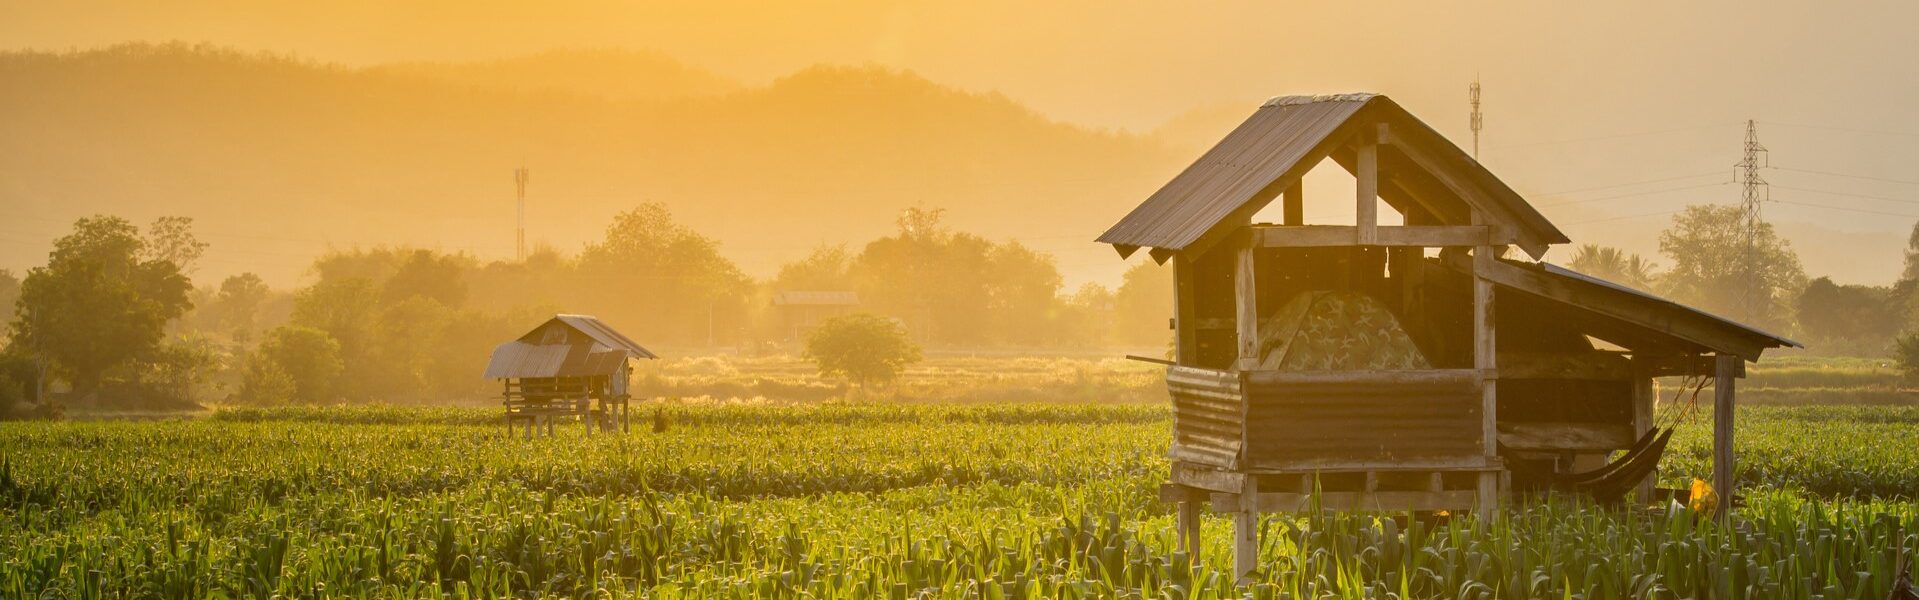 Digitale Öko-Landwirtschaft: SAP Japan unterstützt entlegene Dörfer